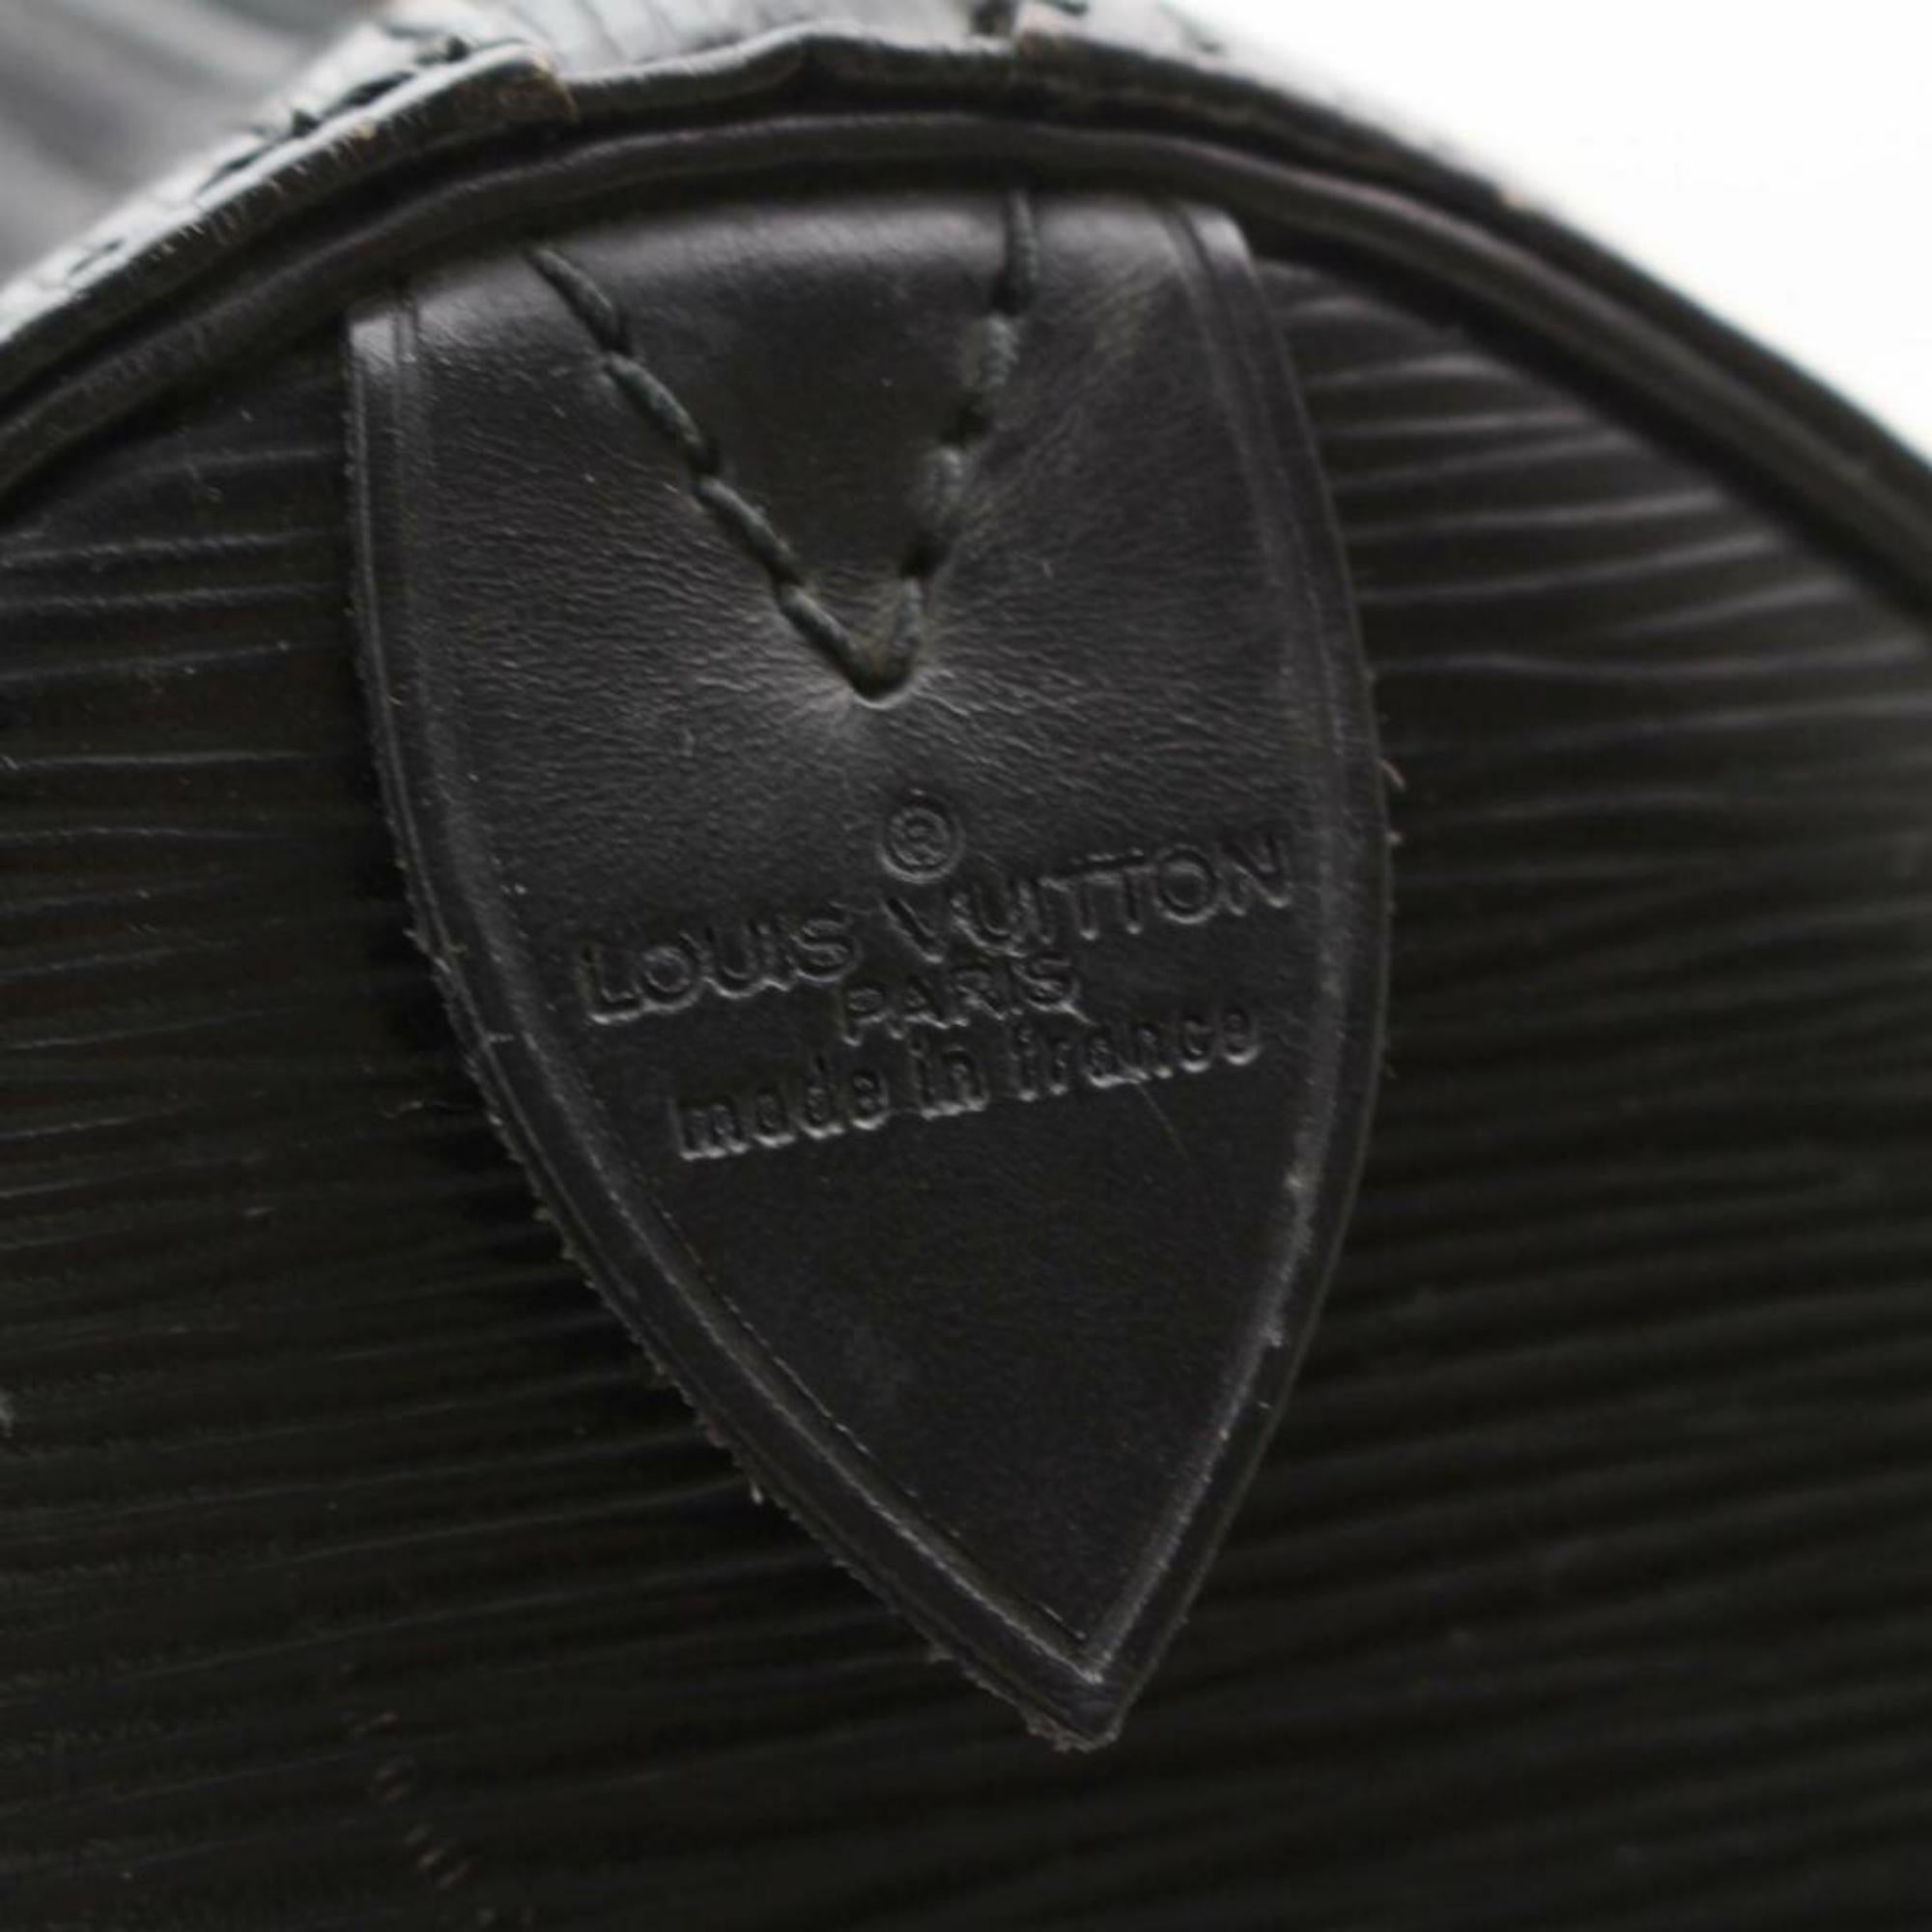 Louis Vuitton Keepall Duffle Noir 45 870140 Black Leather Weekend/Travel Bag For Sale 8